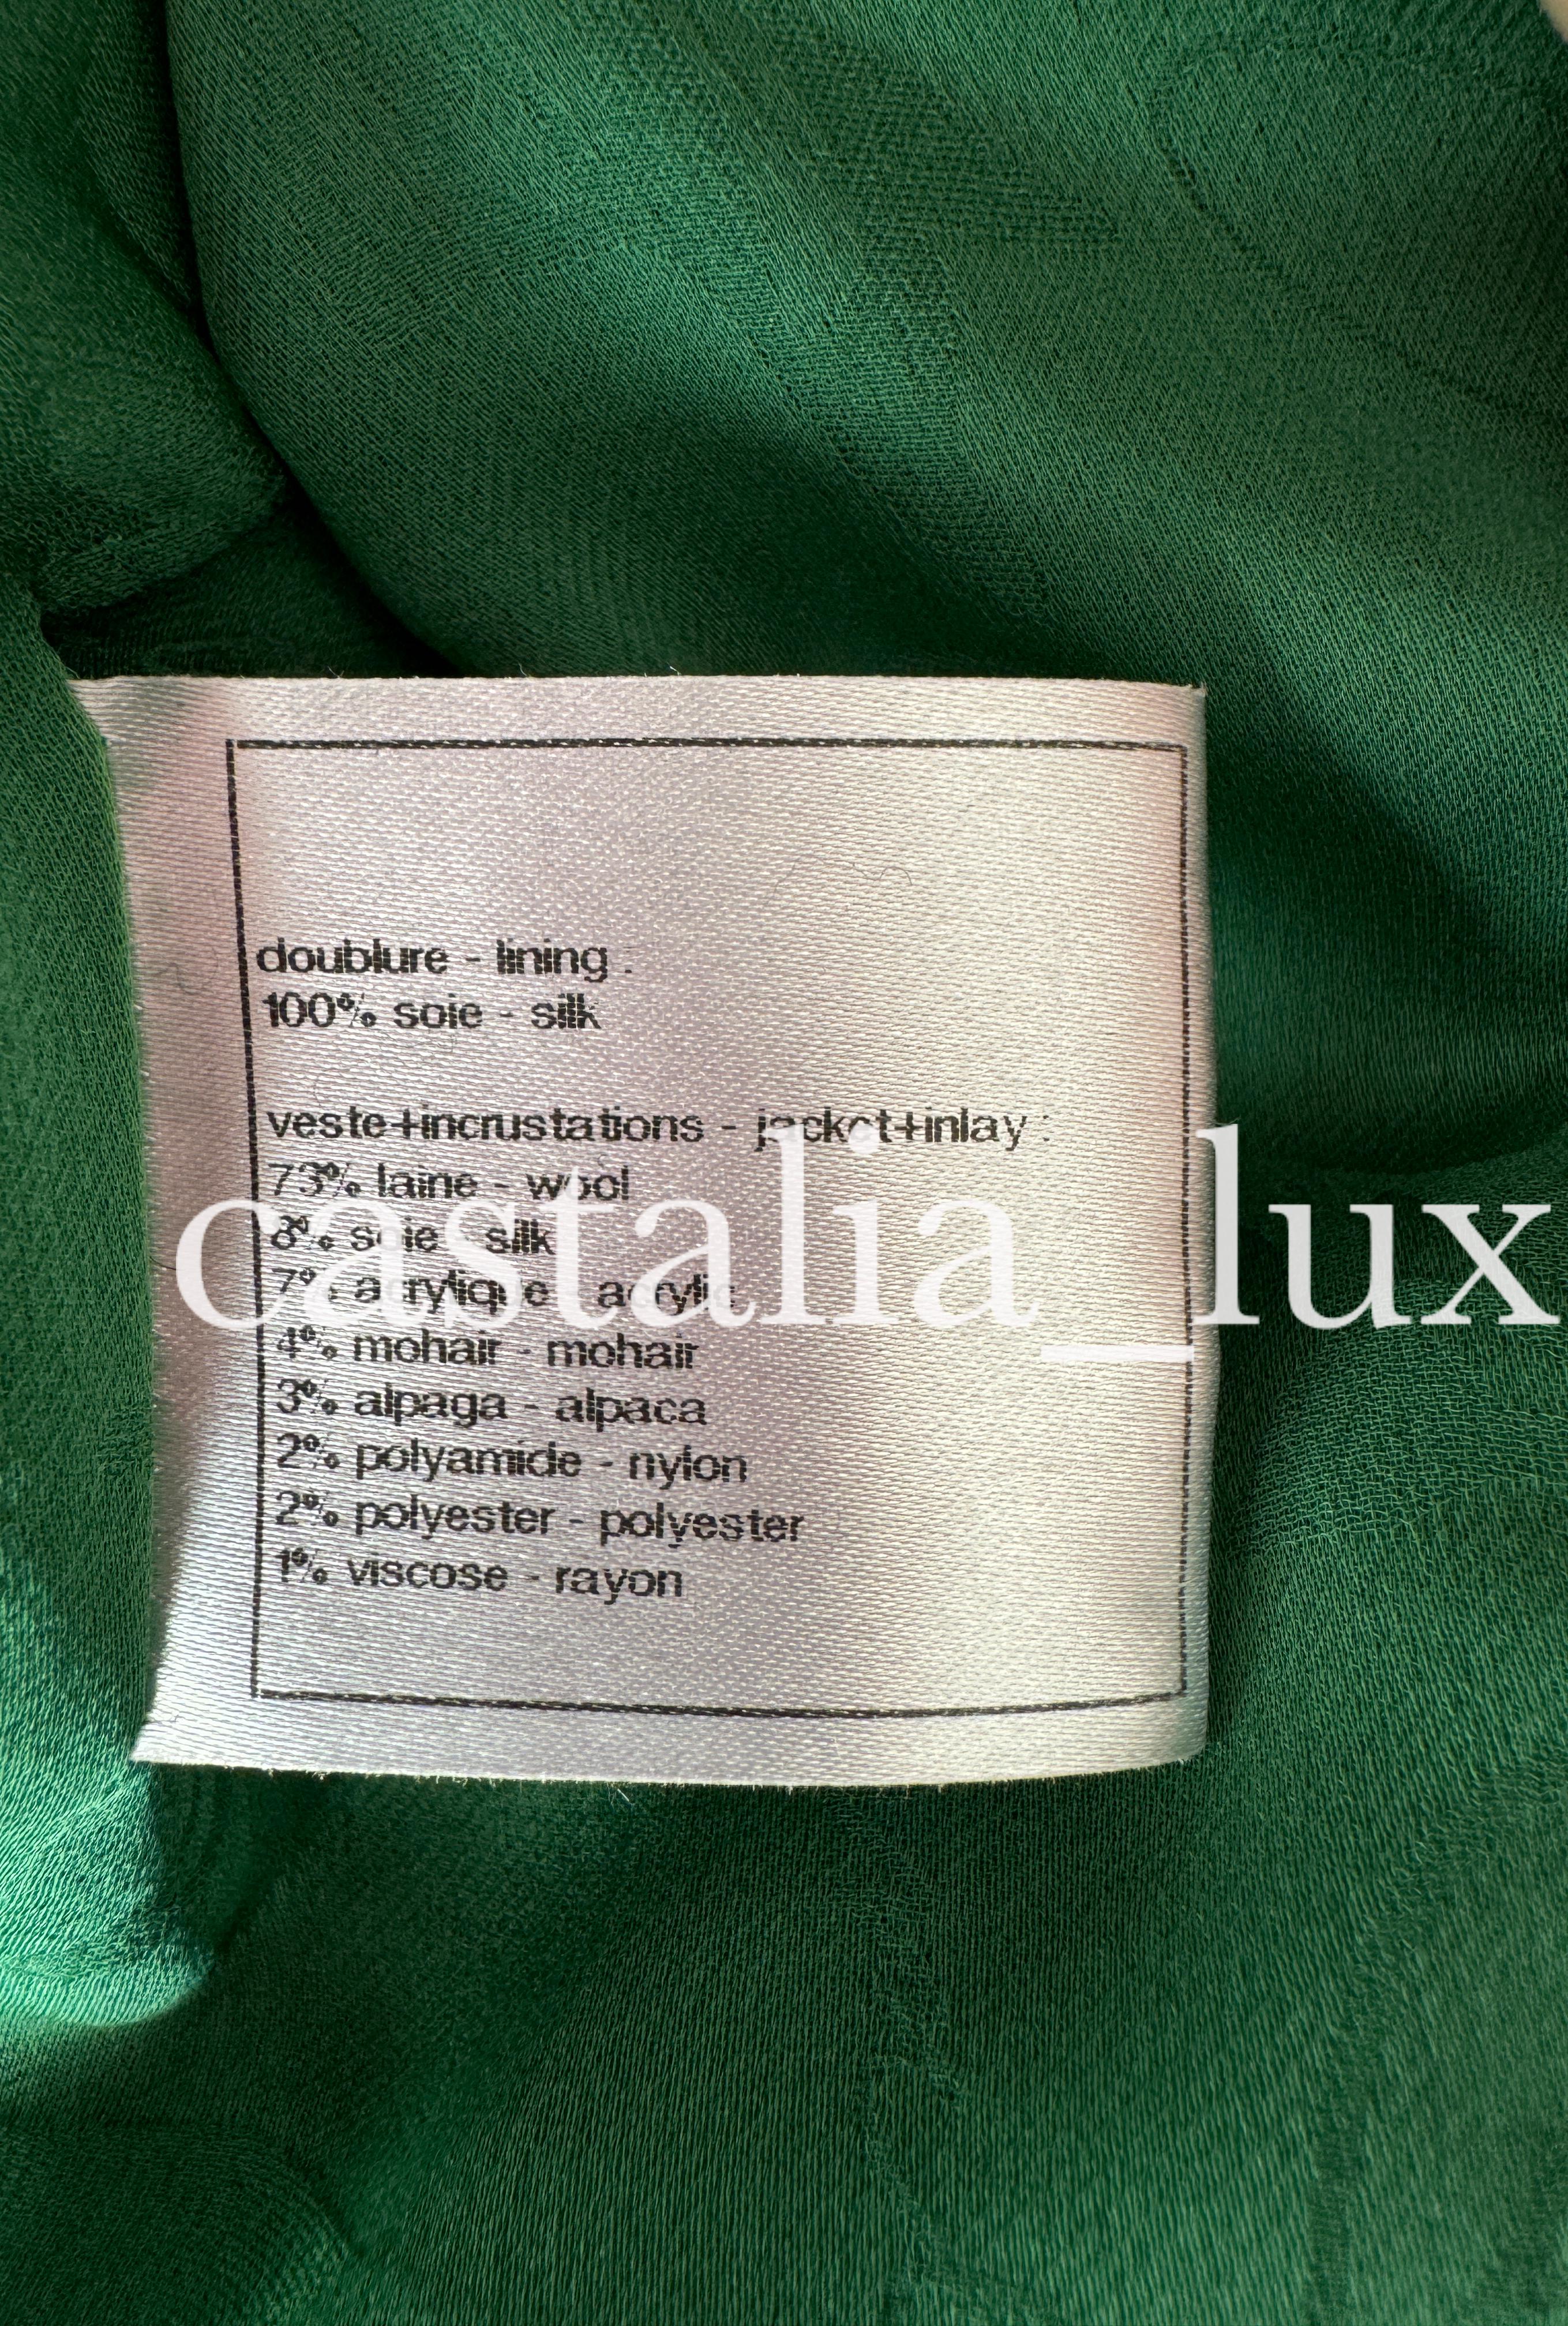 Chanel Super Rare Green and Black Lesage Tweed Jacker 12